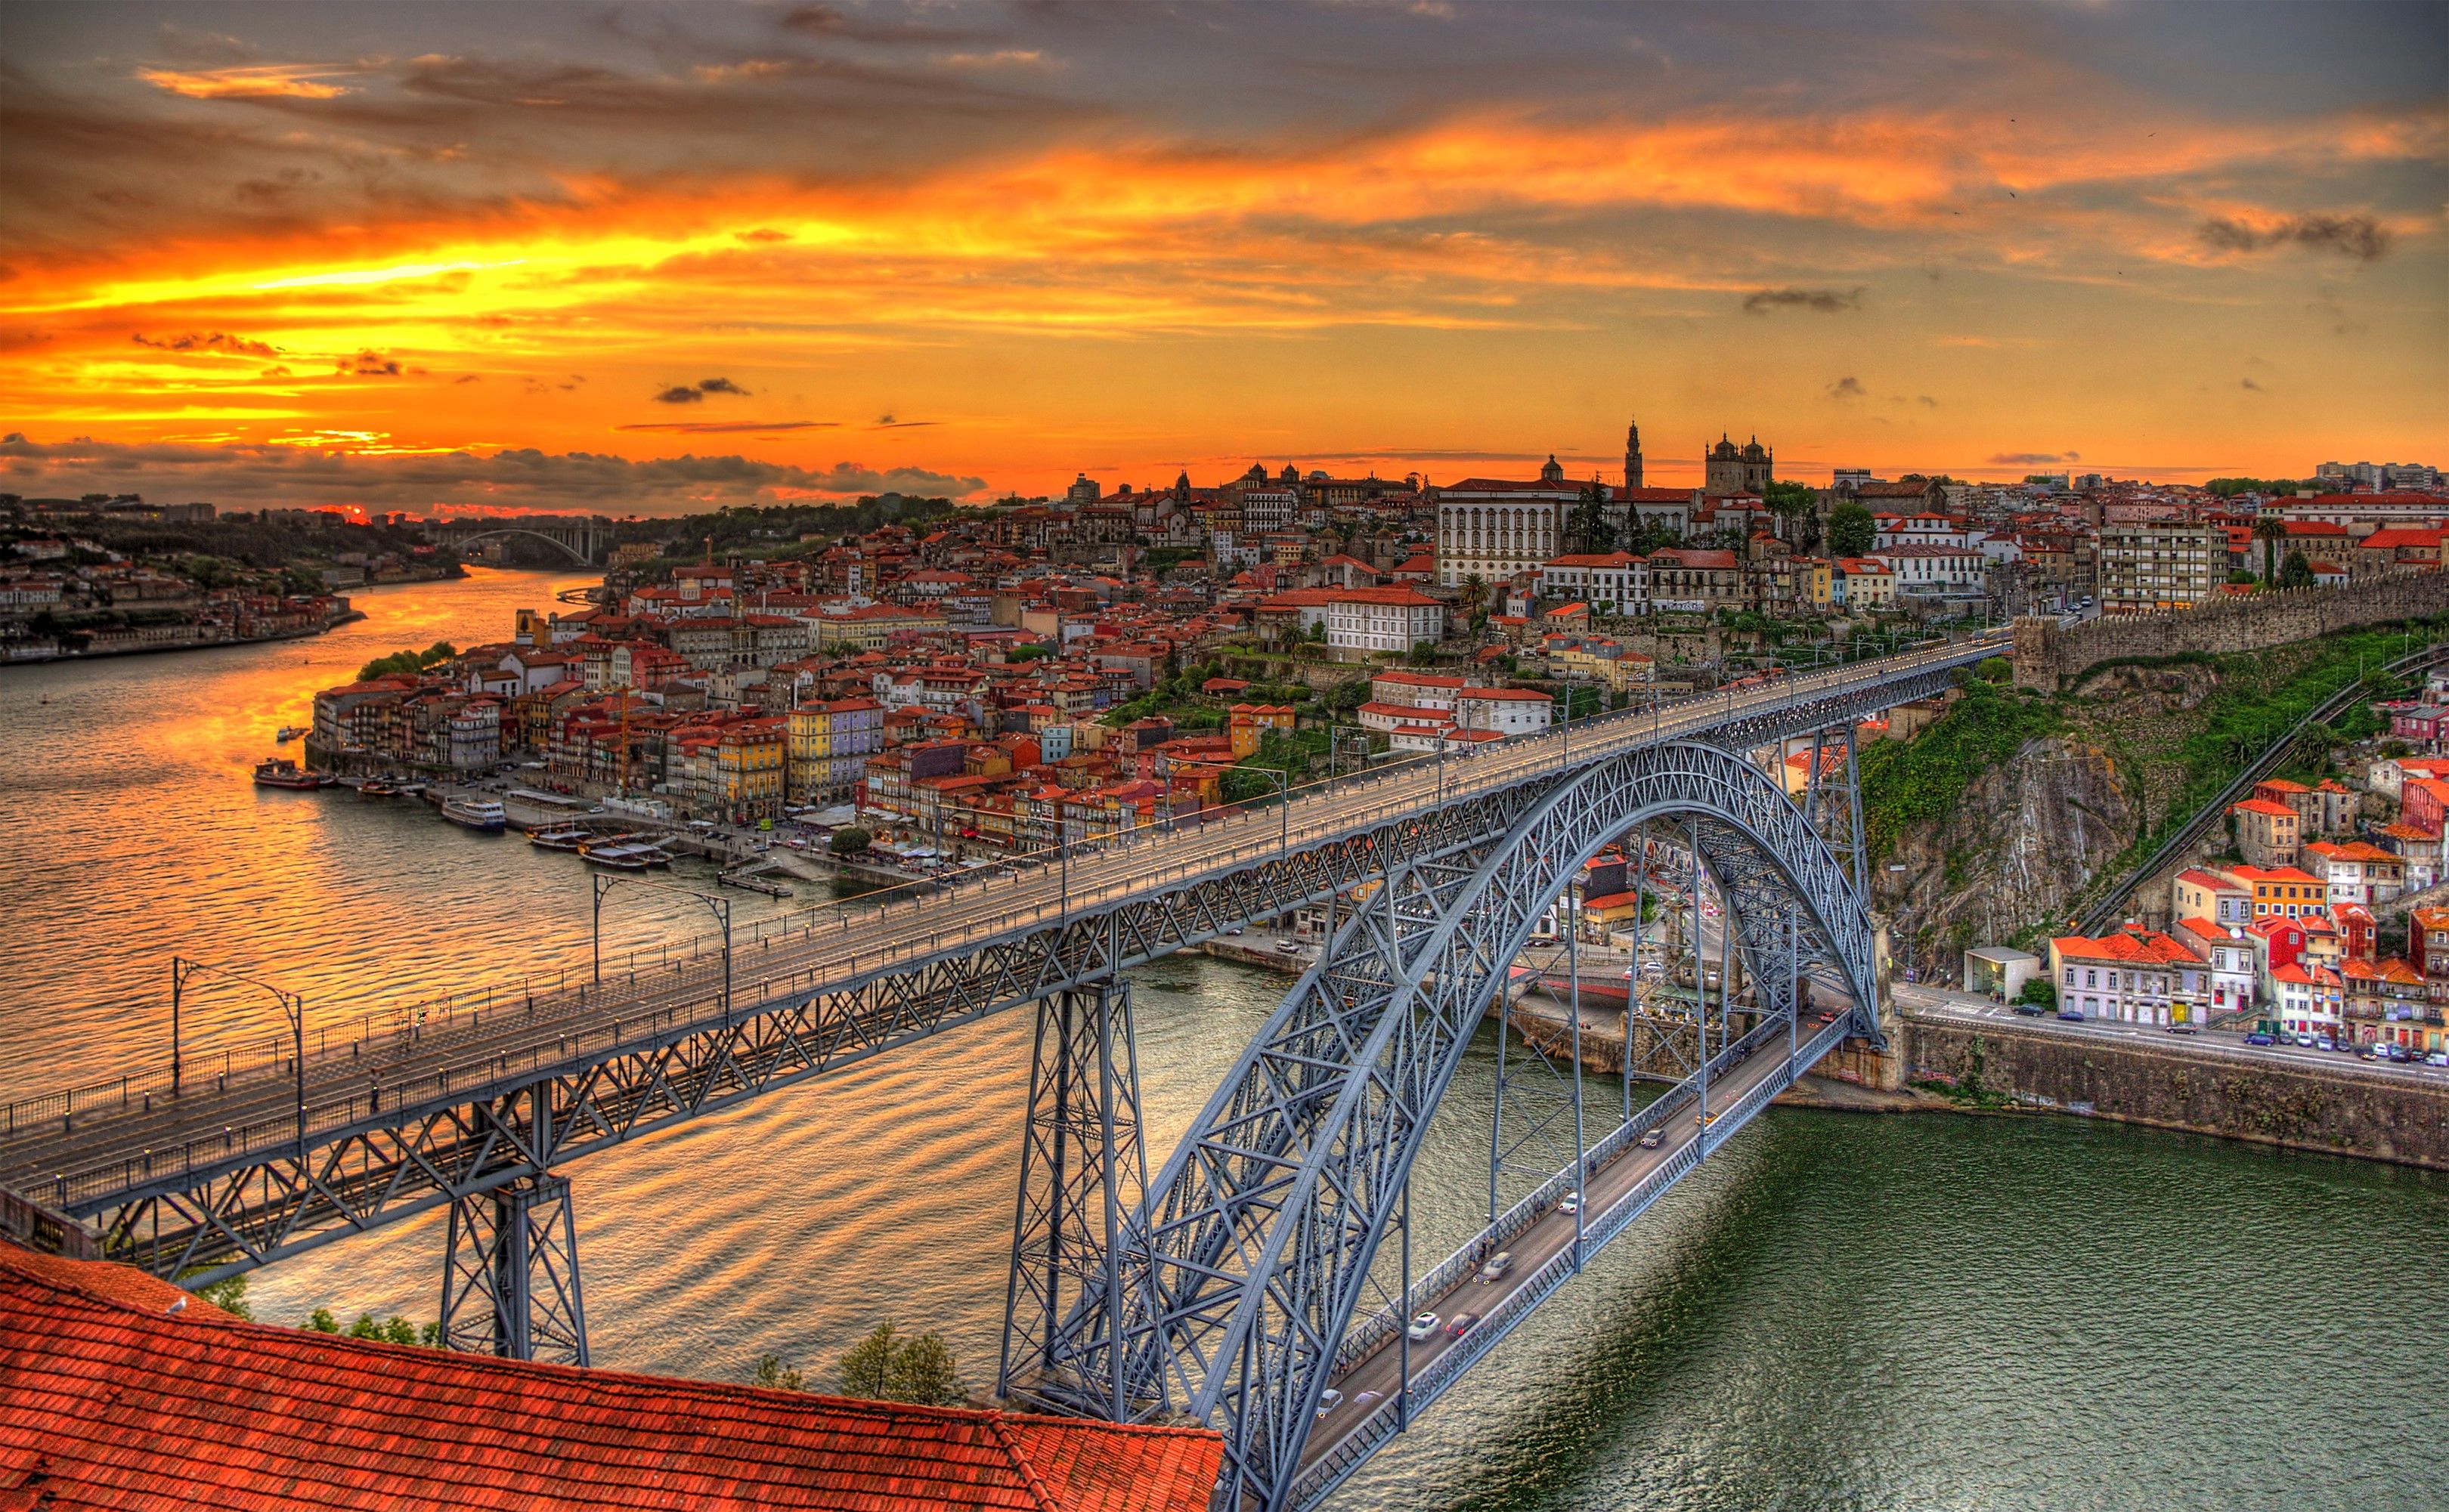 Portugal, Houses, Bridges, Sunrises and sunsets, Porto, Canal. Mocah HD Wallpaper